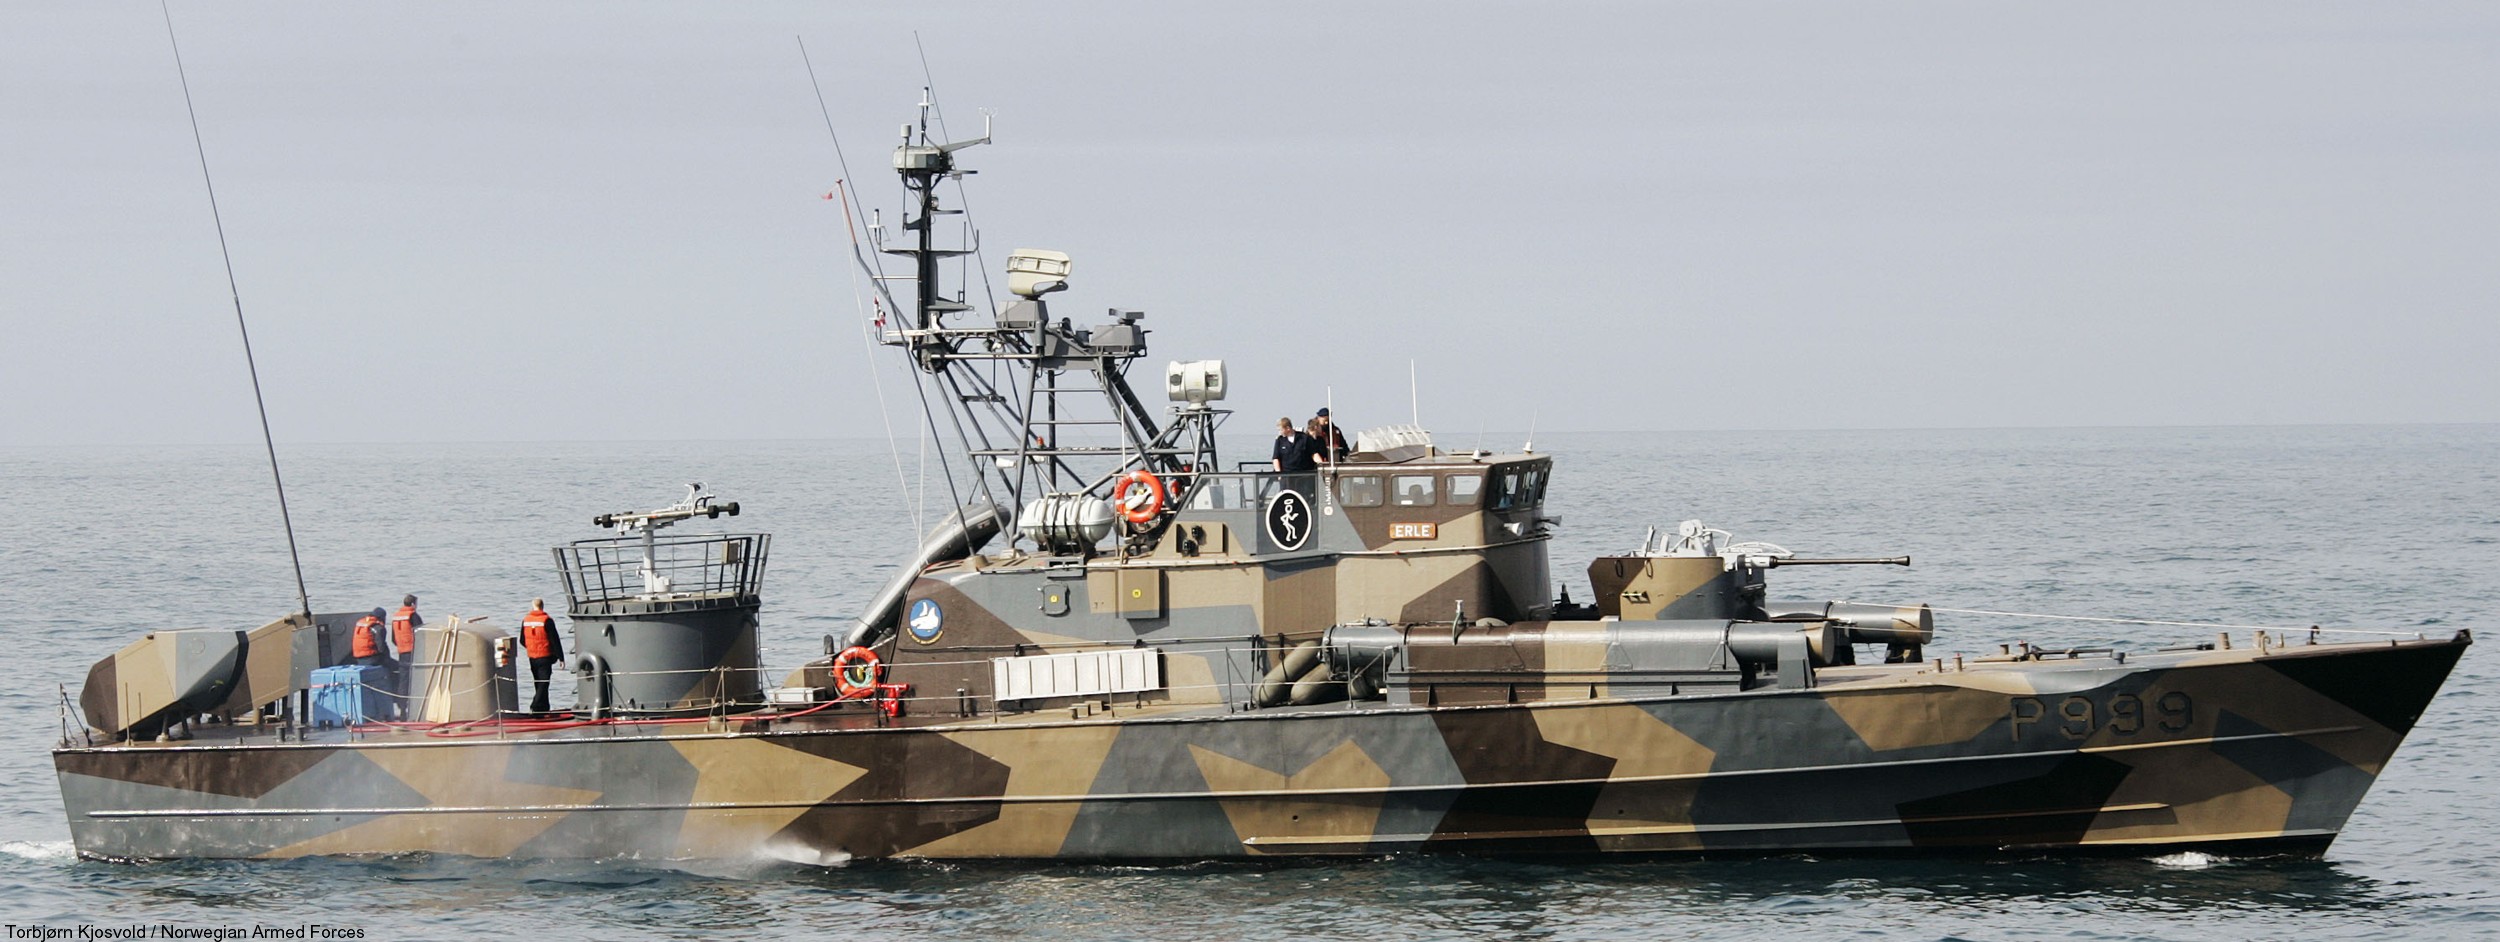 p-999 knm erle hauk class fast attack missile torpedo craft boat norwegian navy sjøforsvaret 03